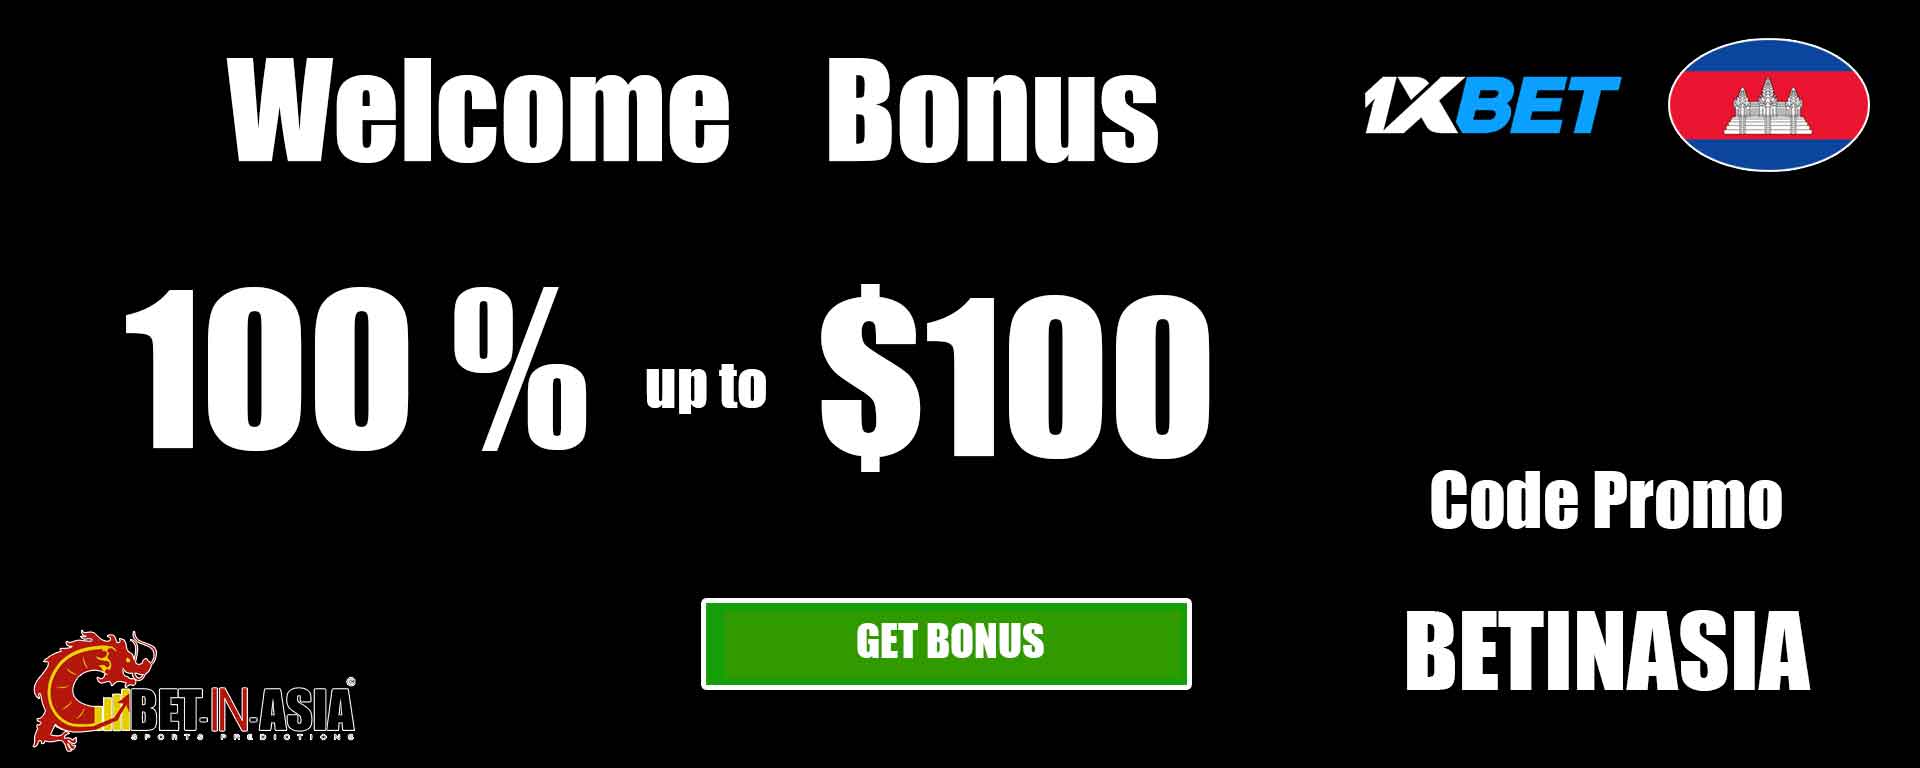 1xbet Asia welcome bonus 100 % on first deposit